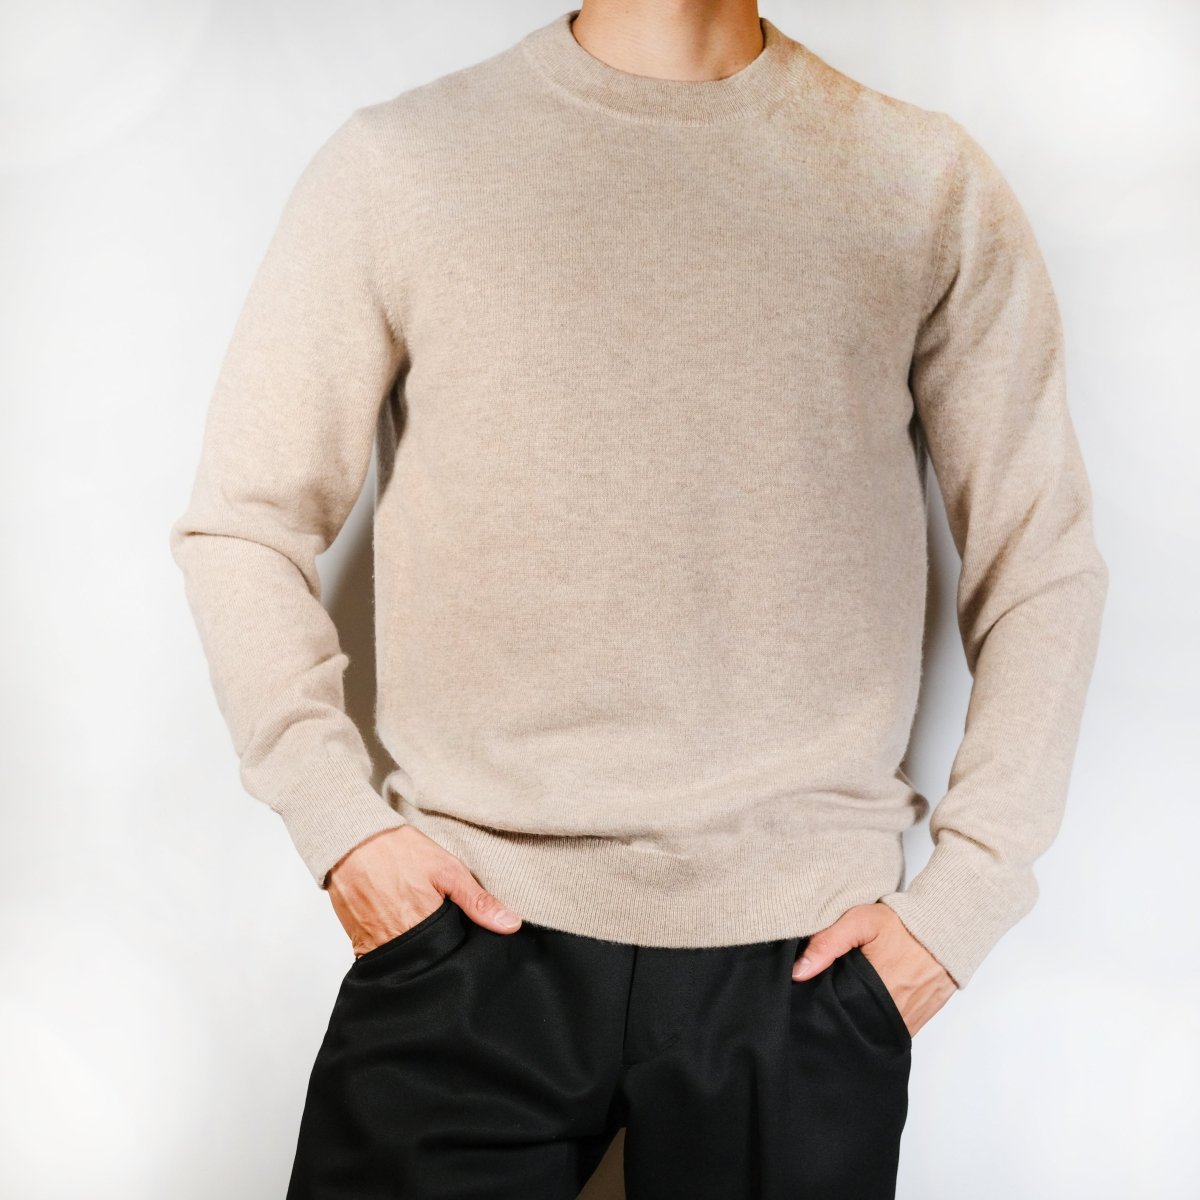 100%2PLYcashmecashmere sweater カシミヤ セーター used ノームコア